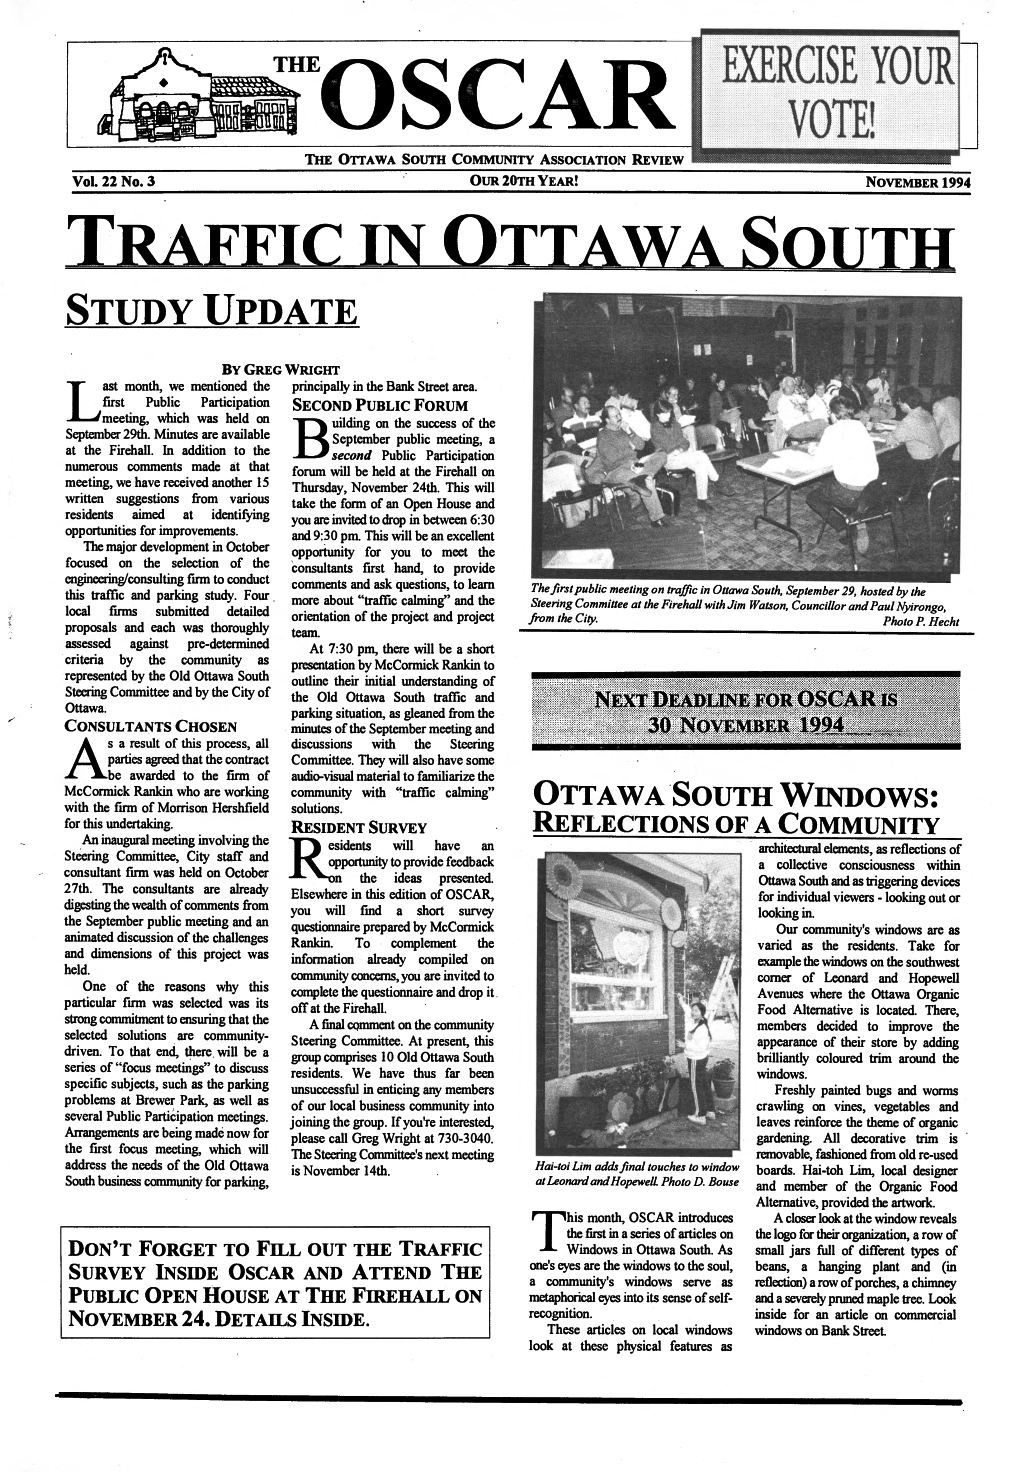 Traffic in Ottawa South Study Update